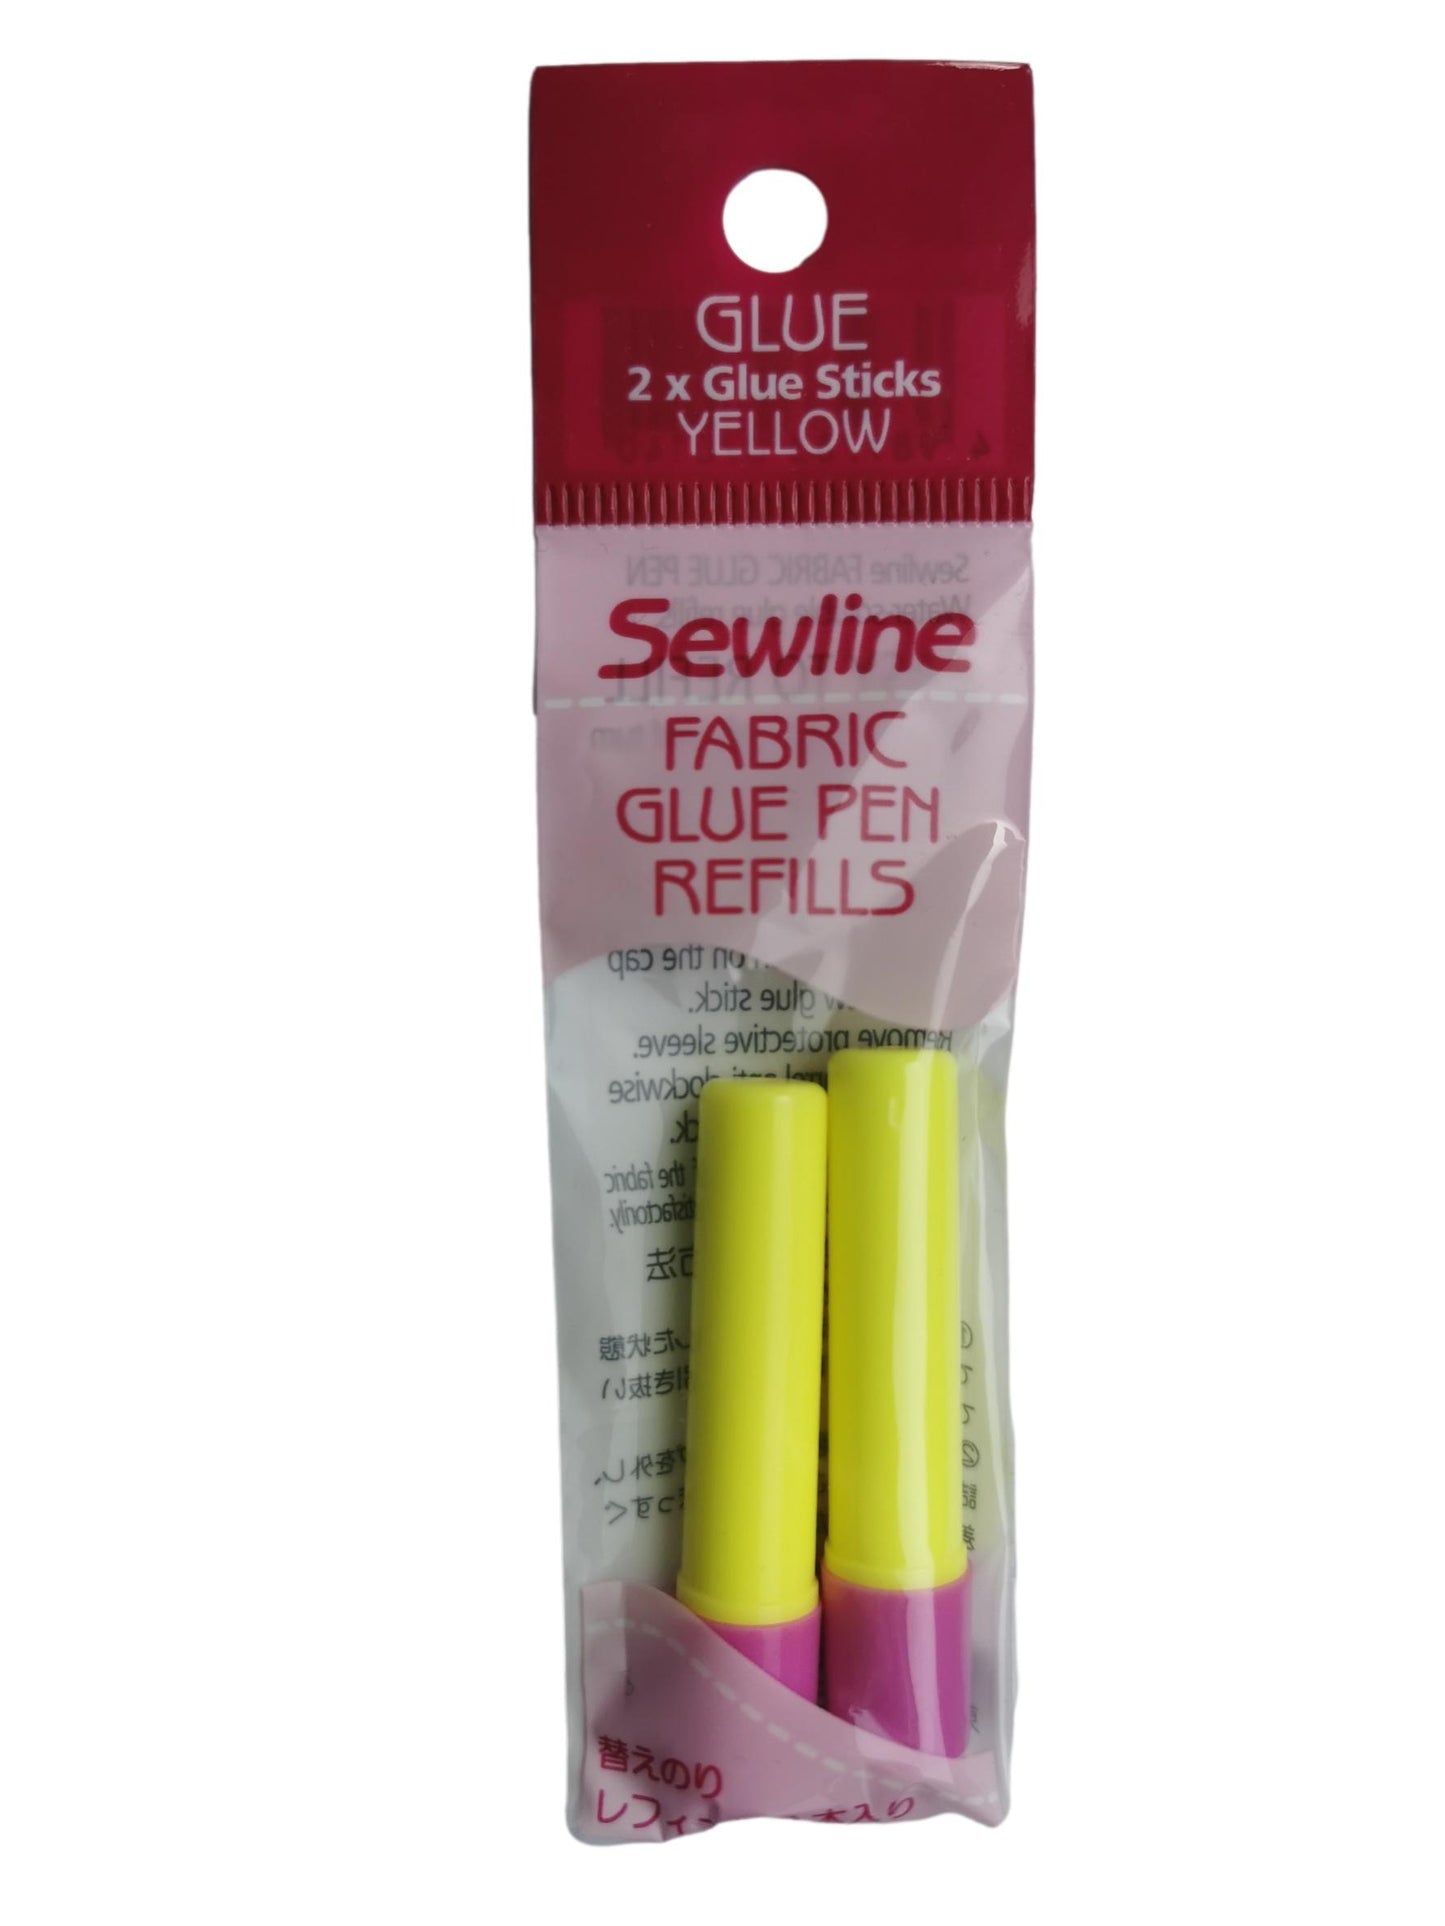 Sewline - Fabric Glue Pen REFILLS